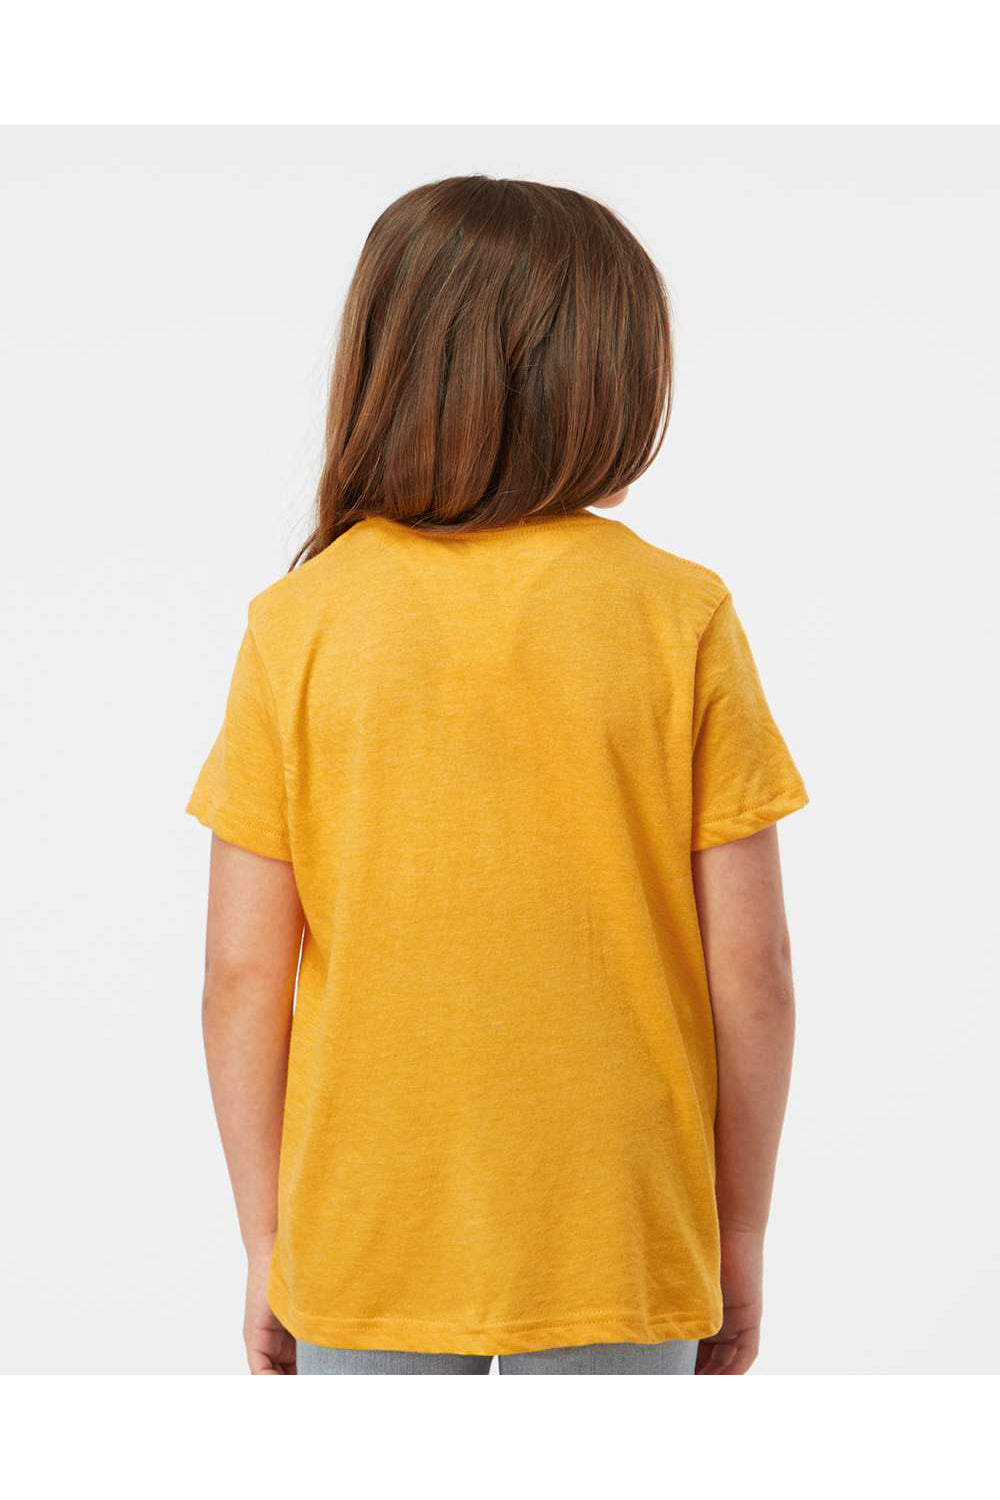 Tultex 235 Youth Fine Jersey Short Sleeve Crewneck T-Shirt Heather Mellow Yellow Model Back